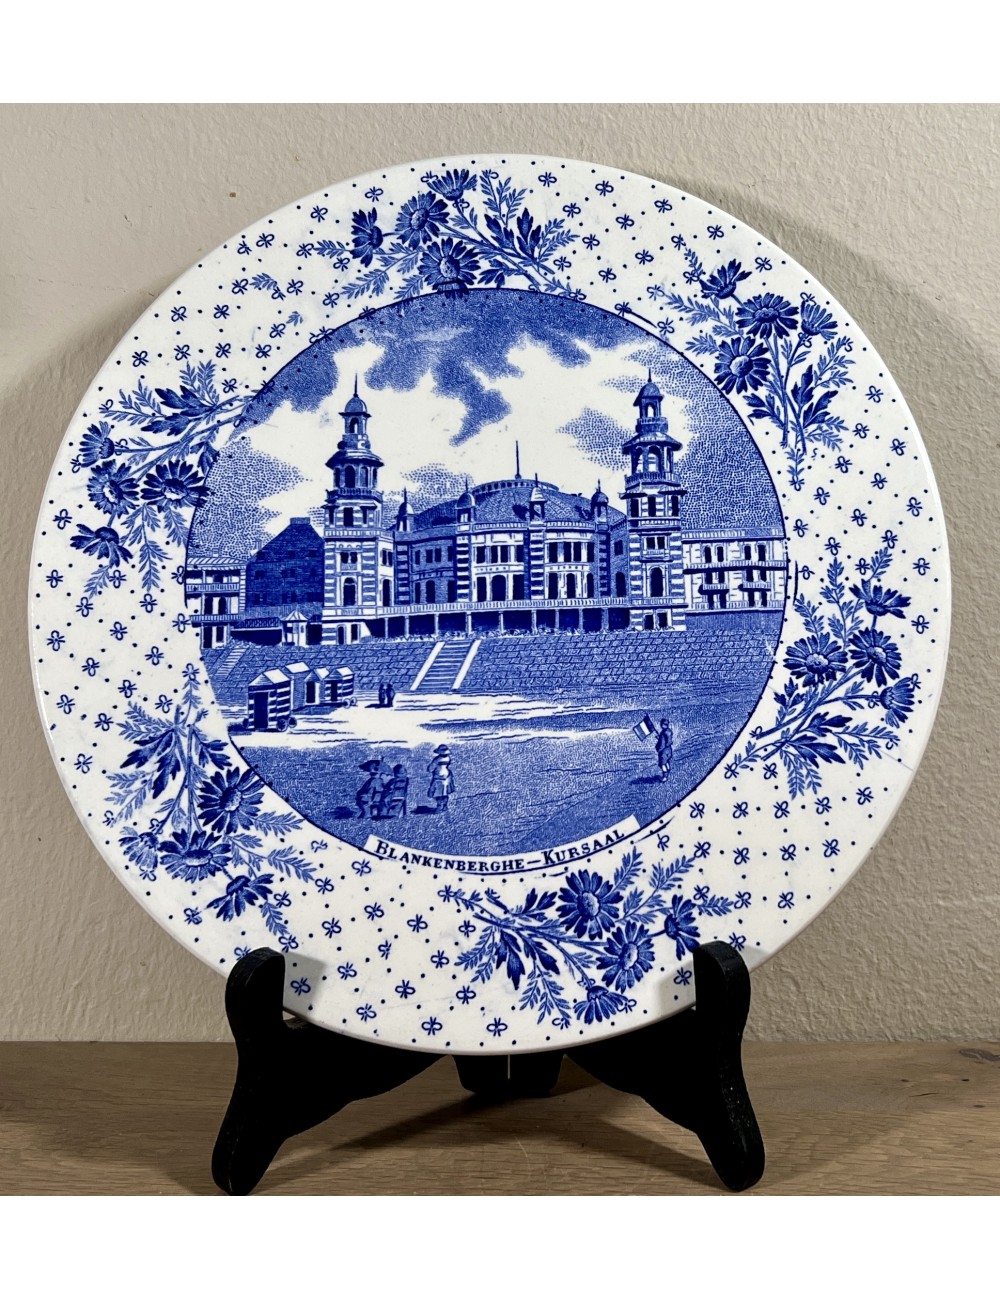 Plate / Decorative plate - Boch - border: PAQUERETTE et paysages touristiques in blue - image of BLANKENBERGHE-KURSAAL